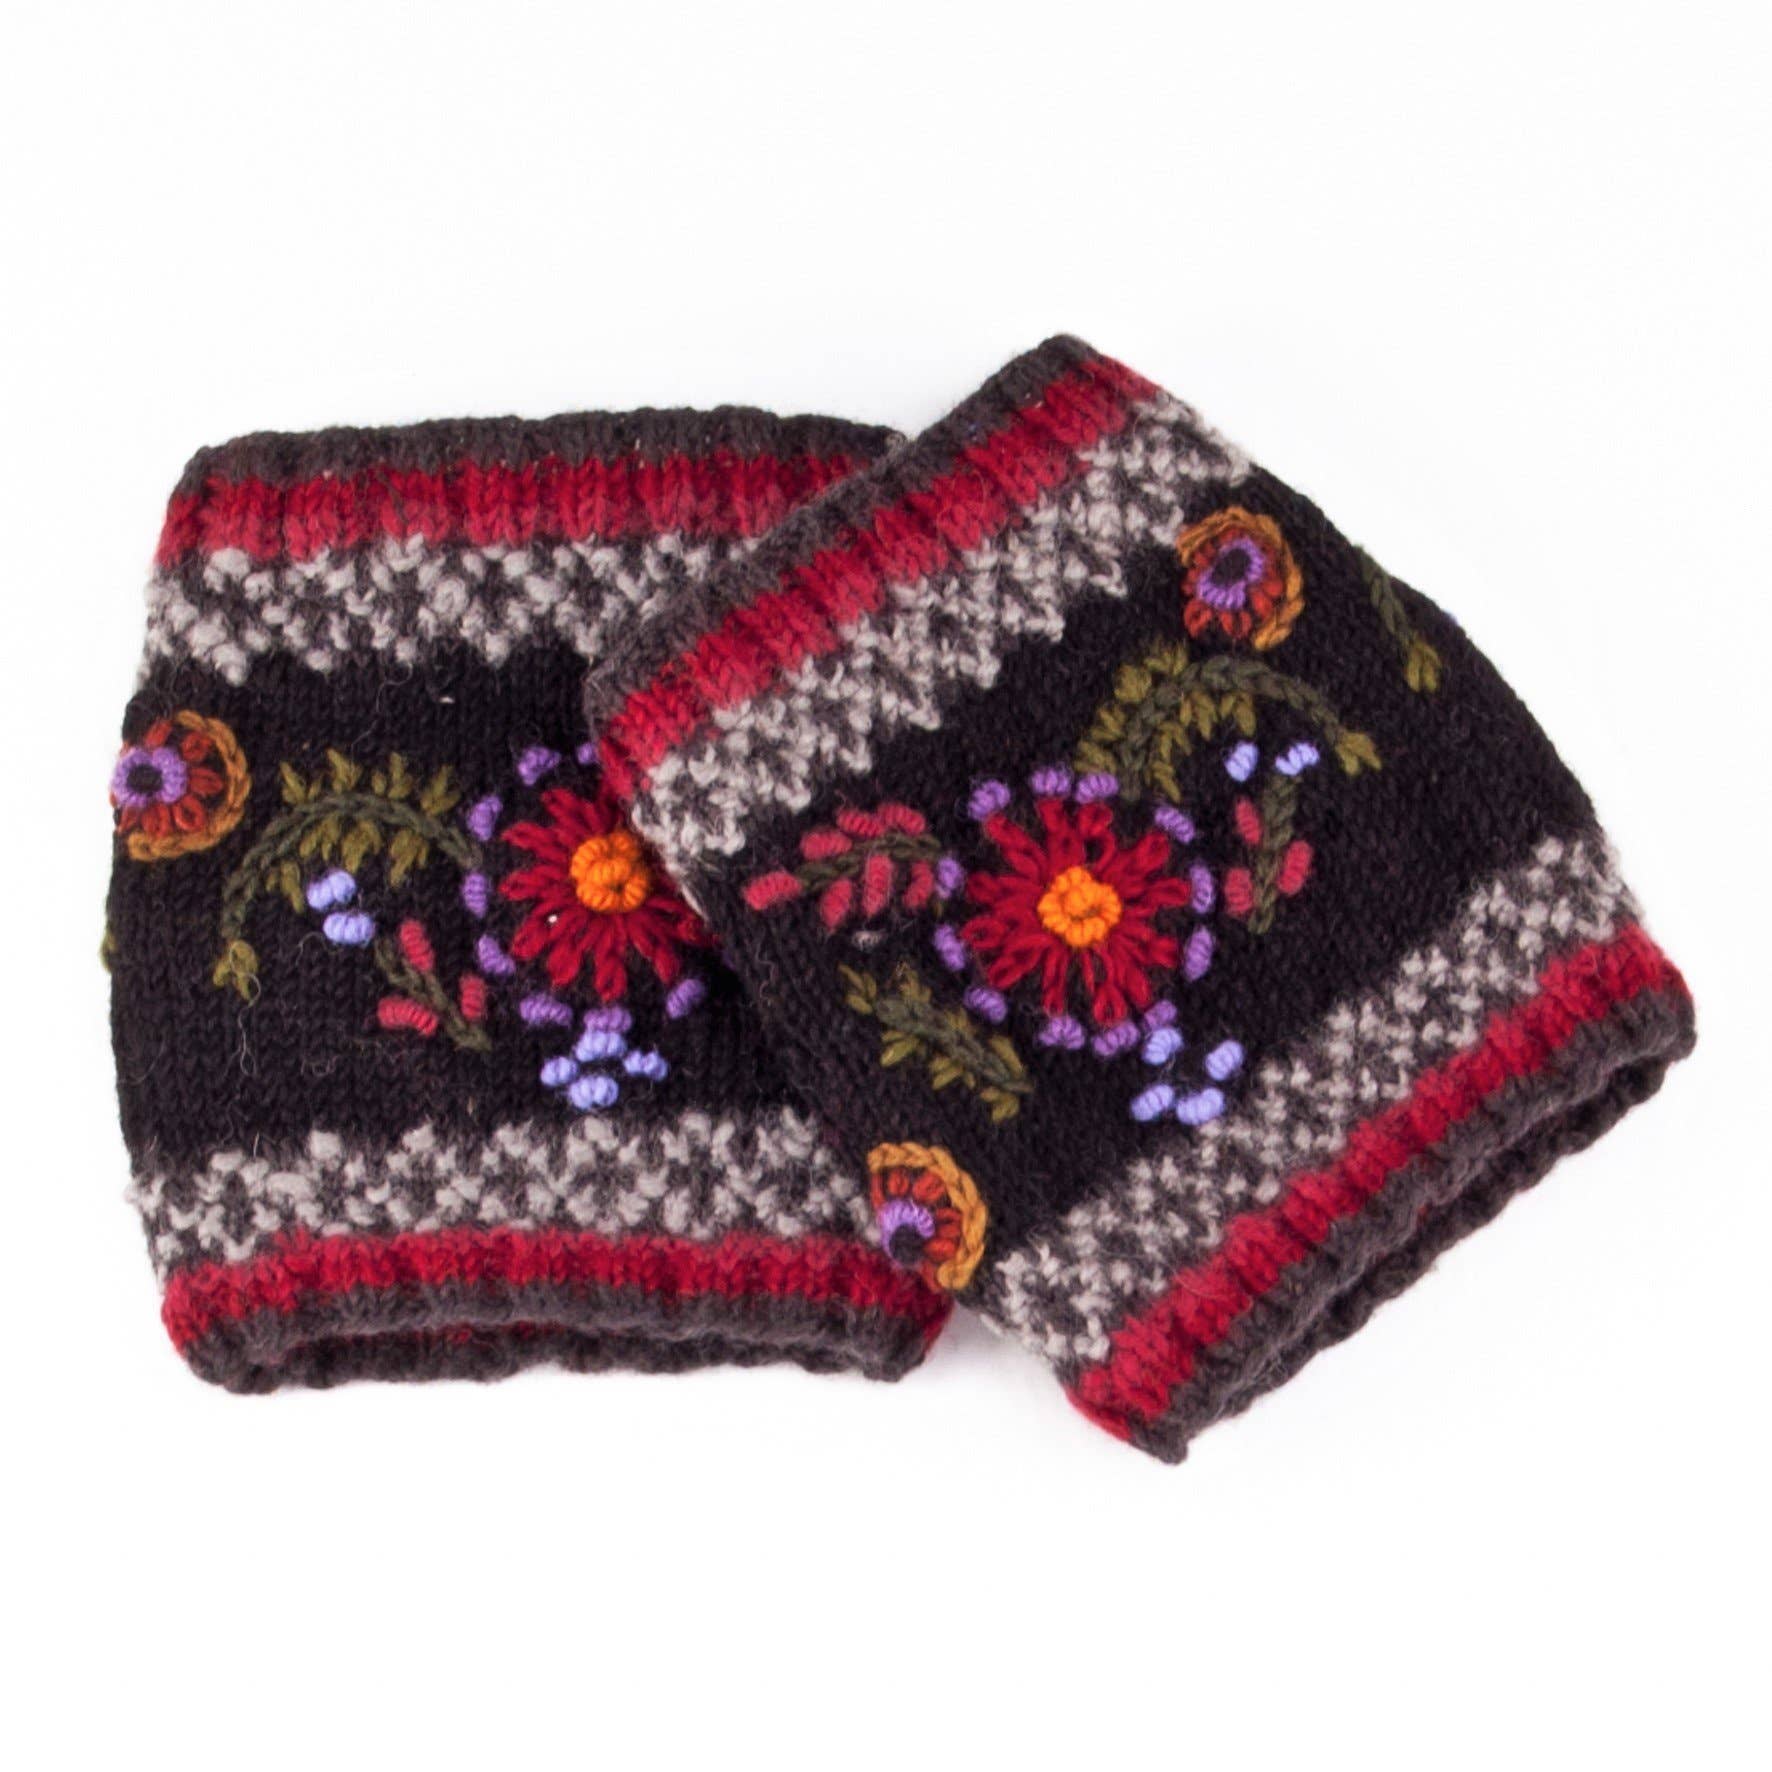 Abigail - women's wool knit boot cuffs